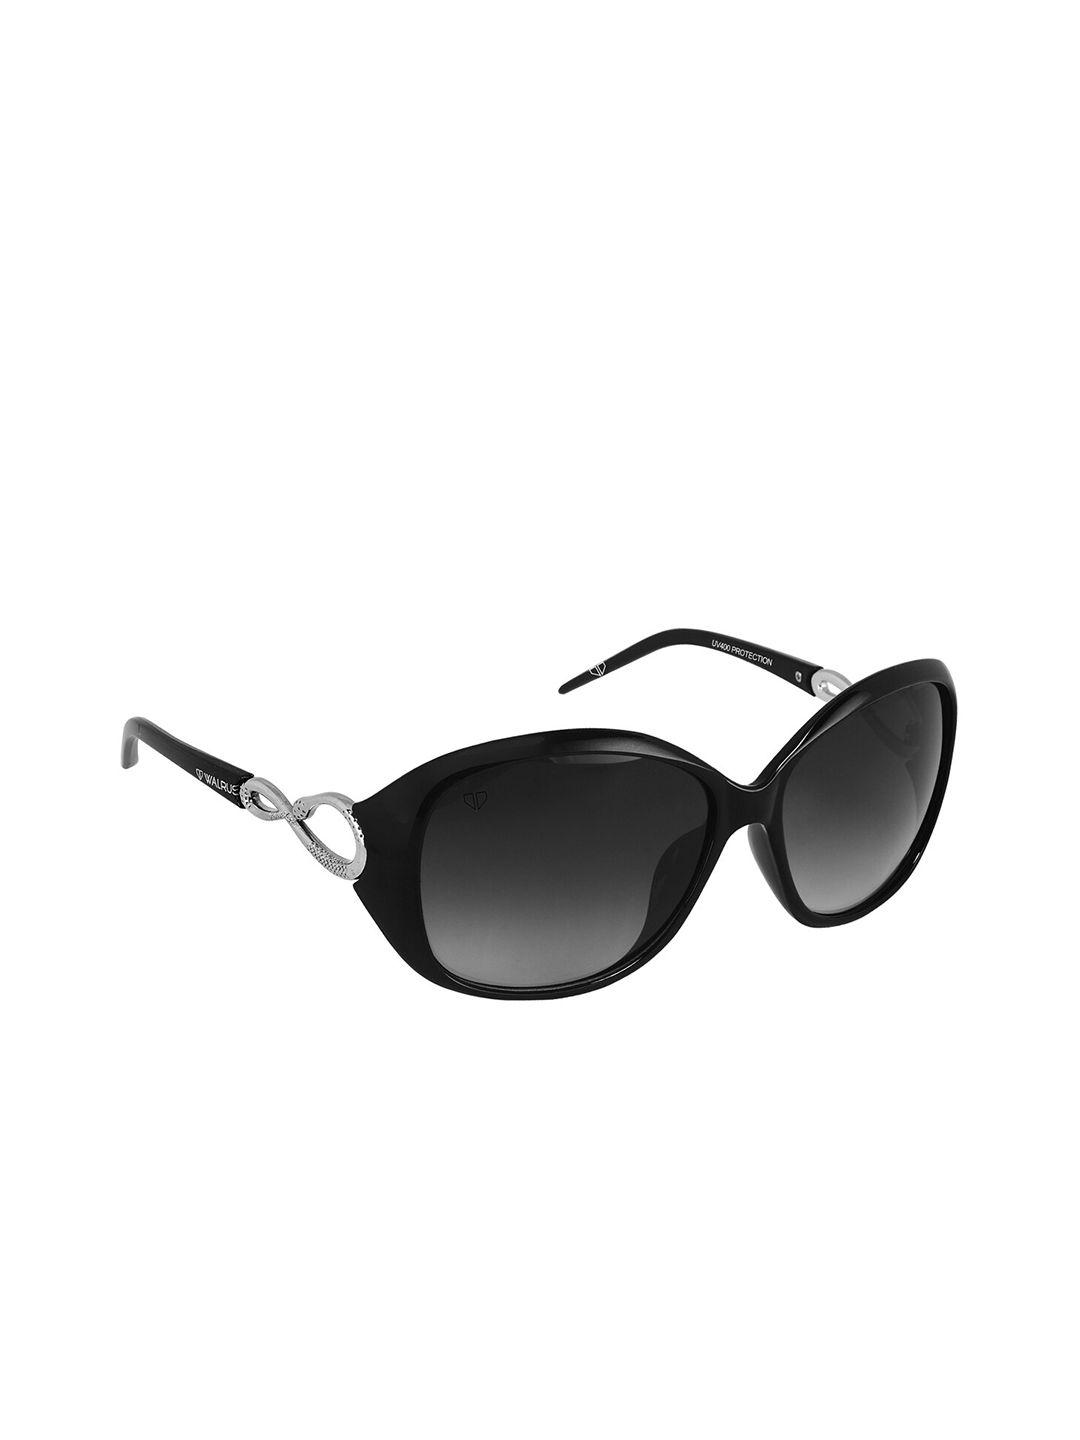 walrus men black lens & black oversized sunglasses wsgw-gaga-iv-020202